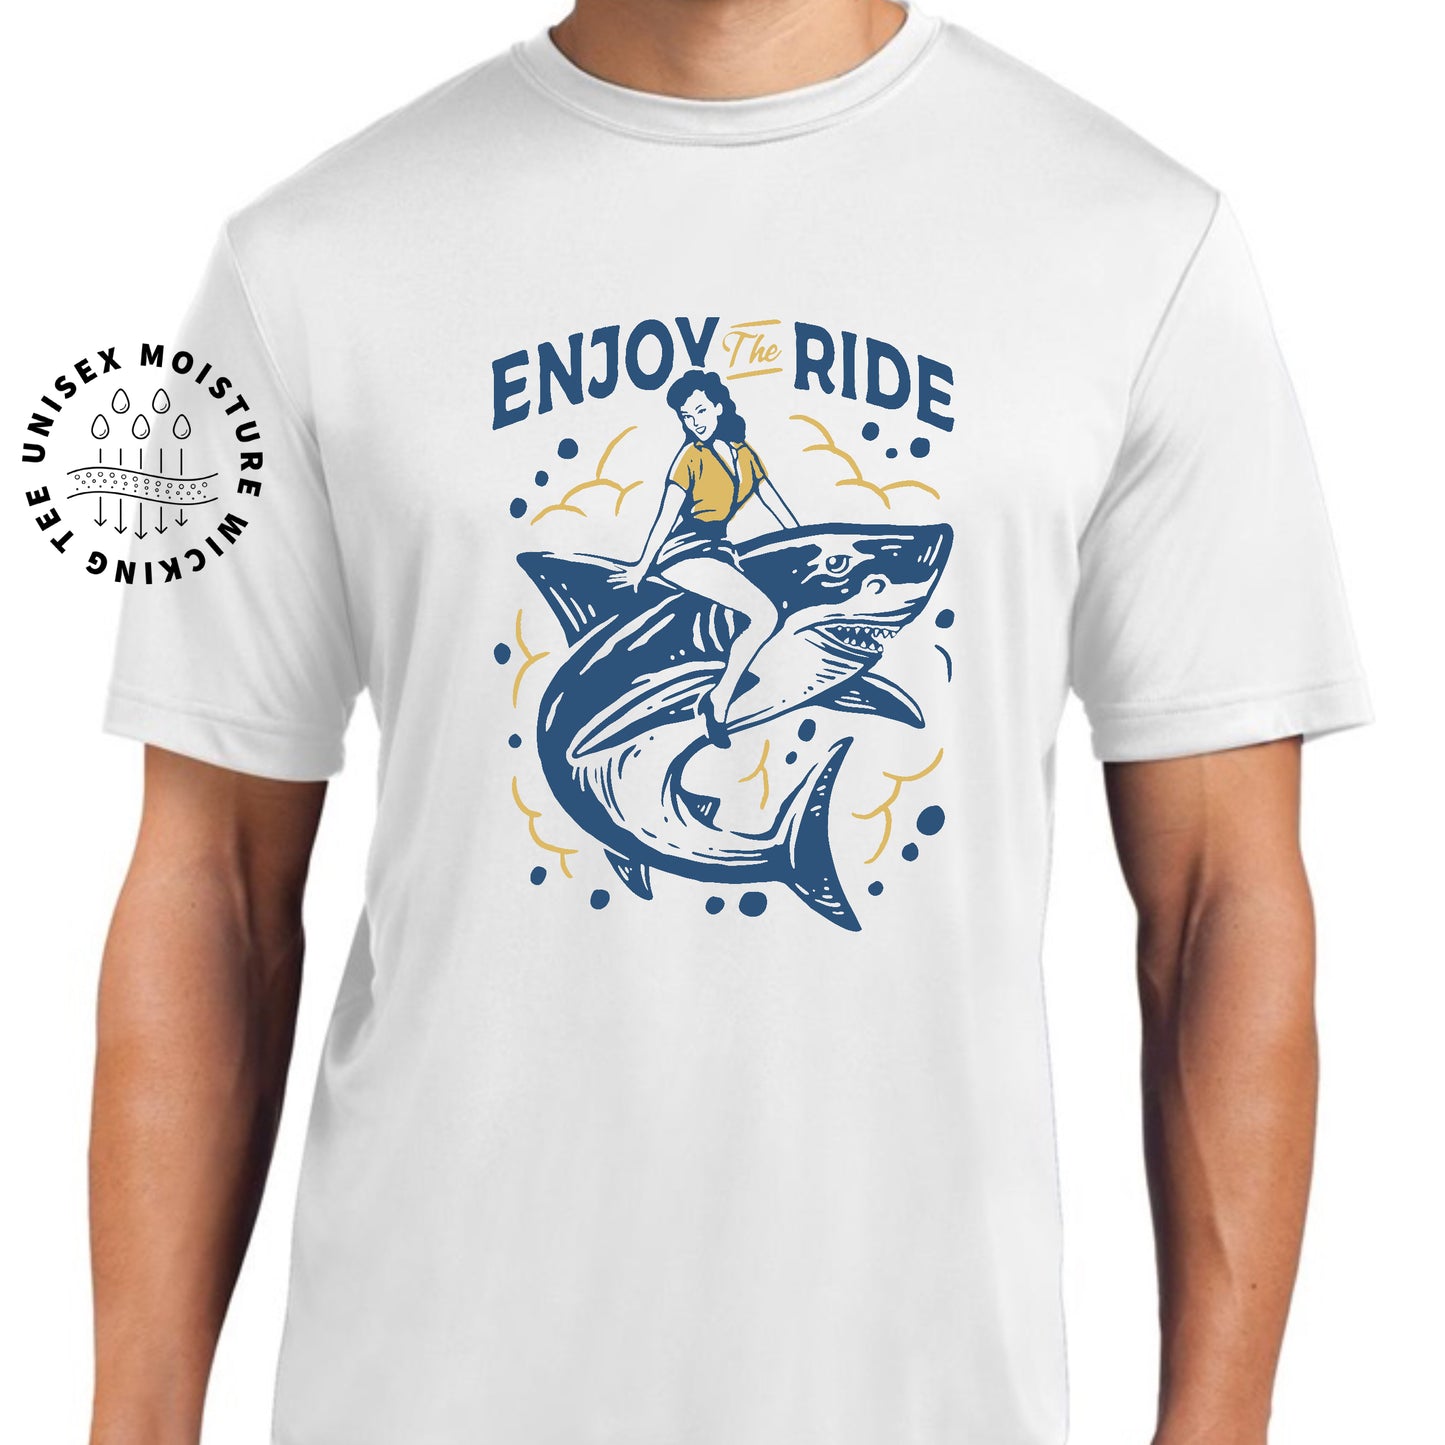 Fun Shark T-Shirt For Enjoy The Ride TShirt For Girl Riding Shark T Shirt For Pinup Tee For Beach Tee For Moisture Wicking Sport Shirt